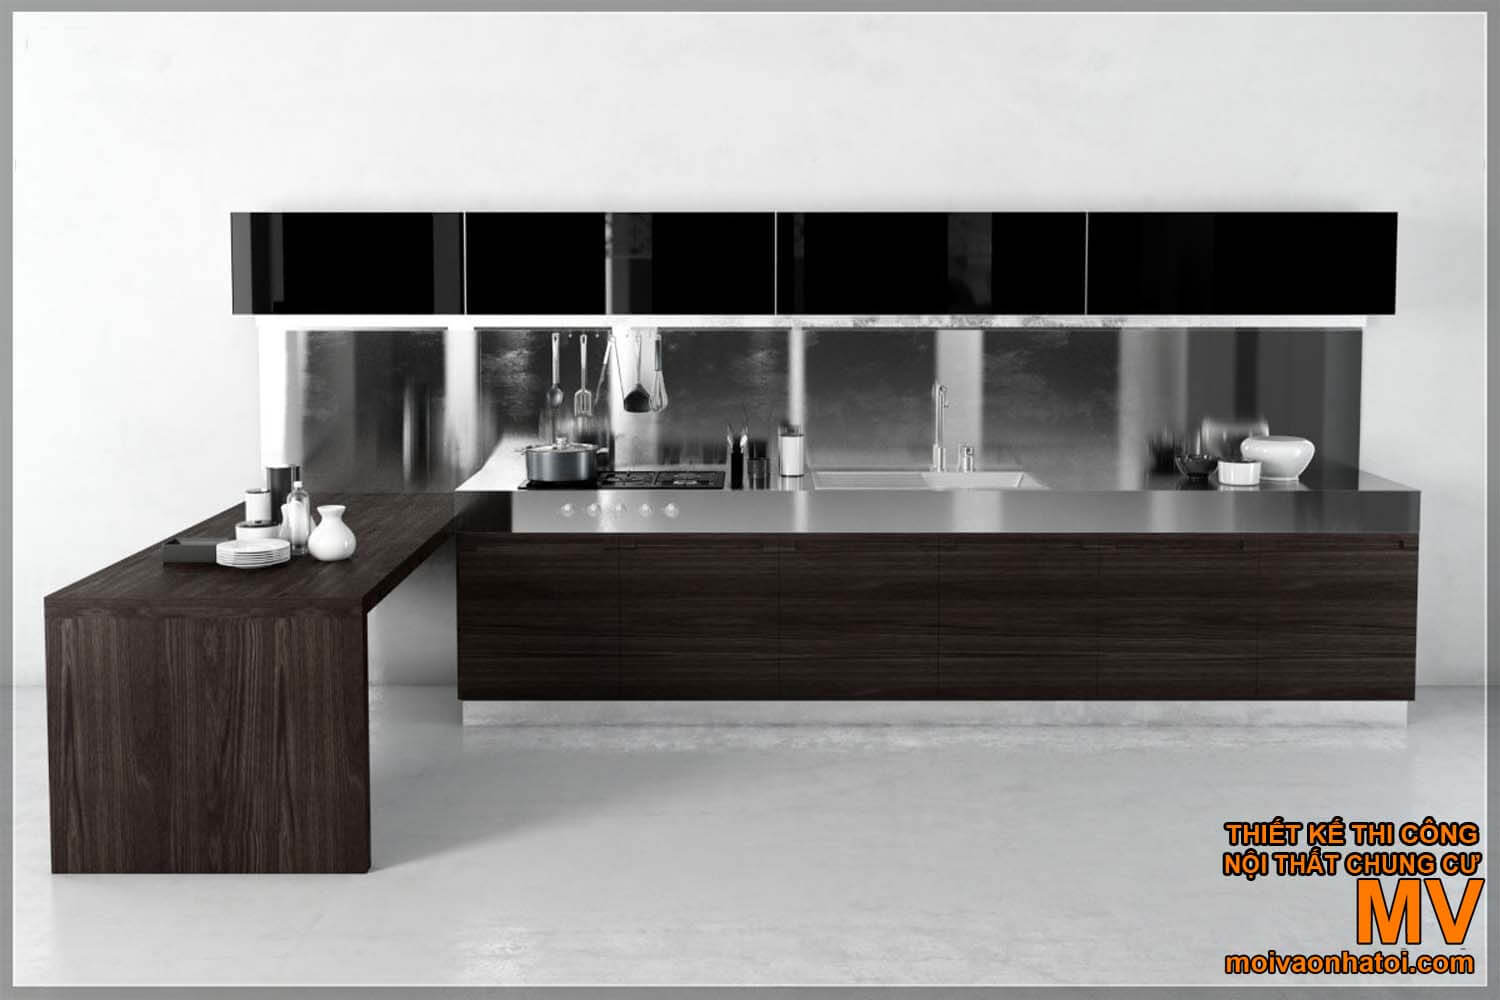 industrial wooden kitchen cabinets